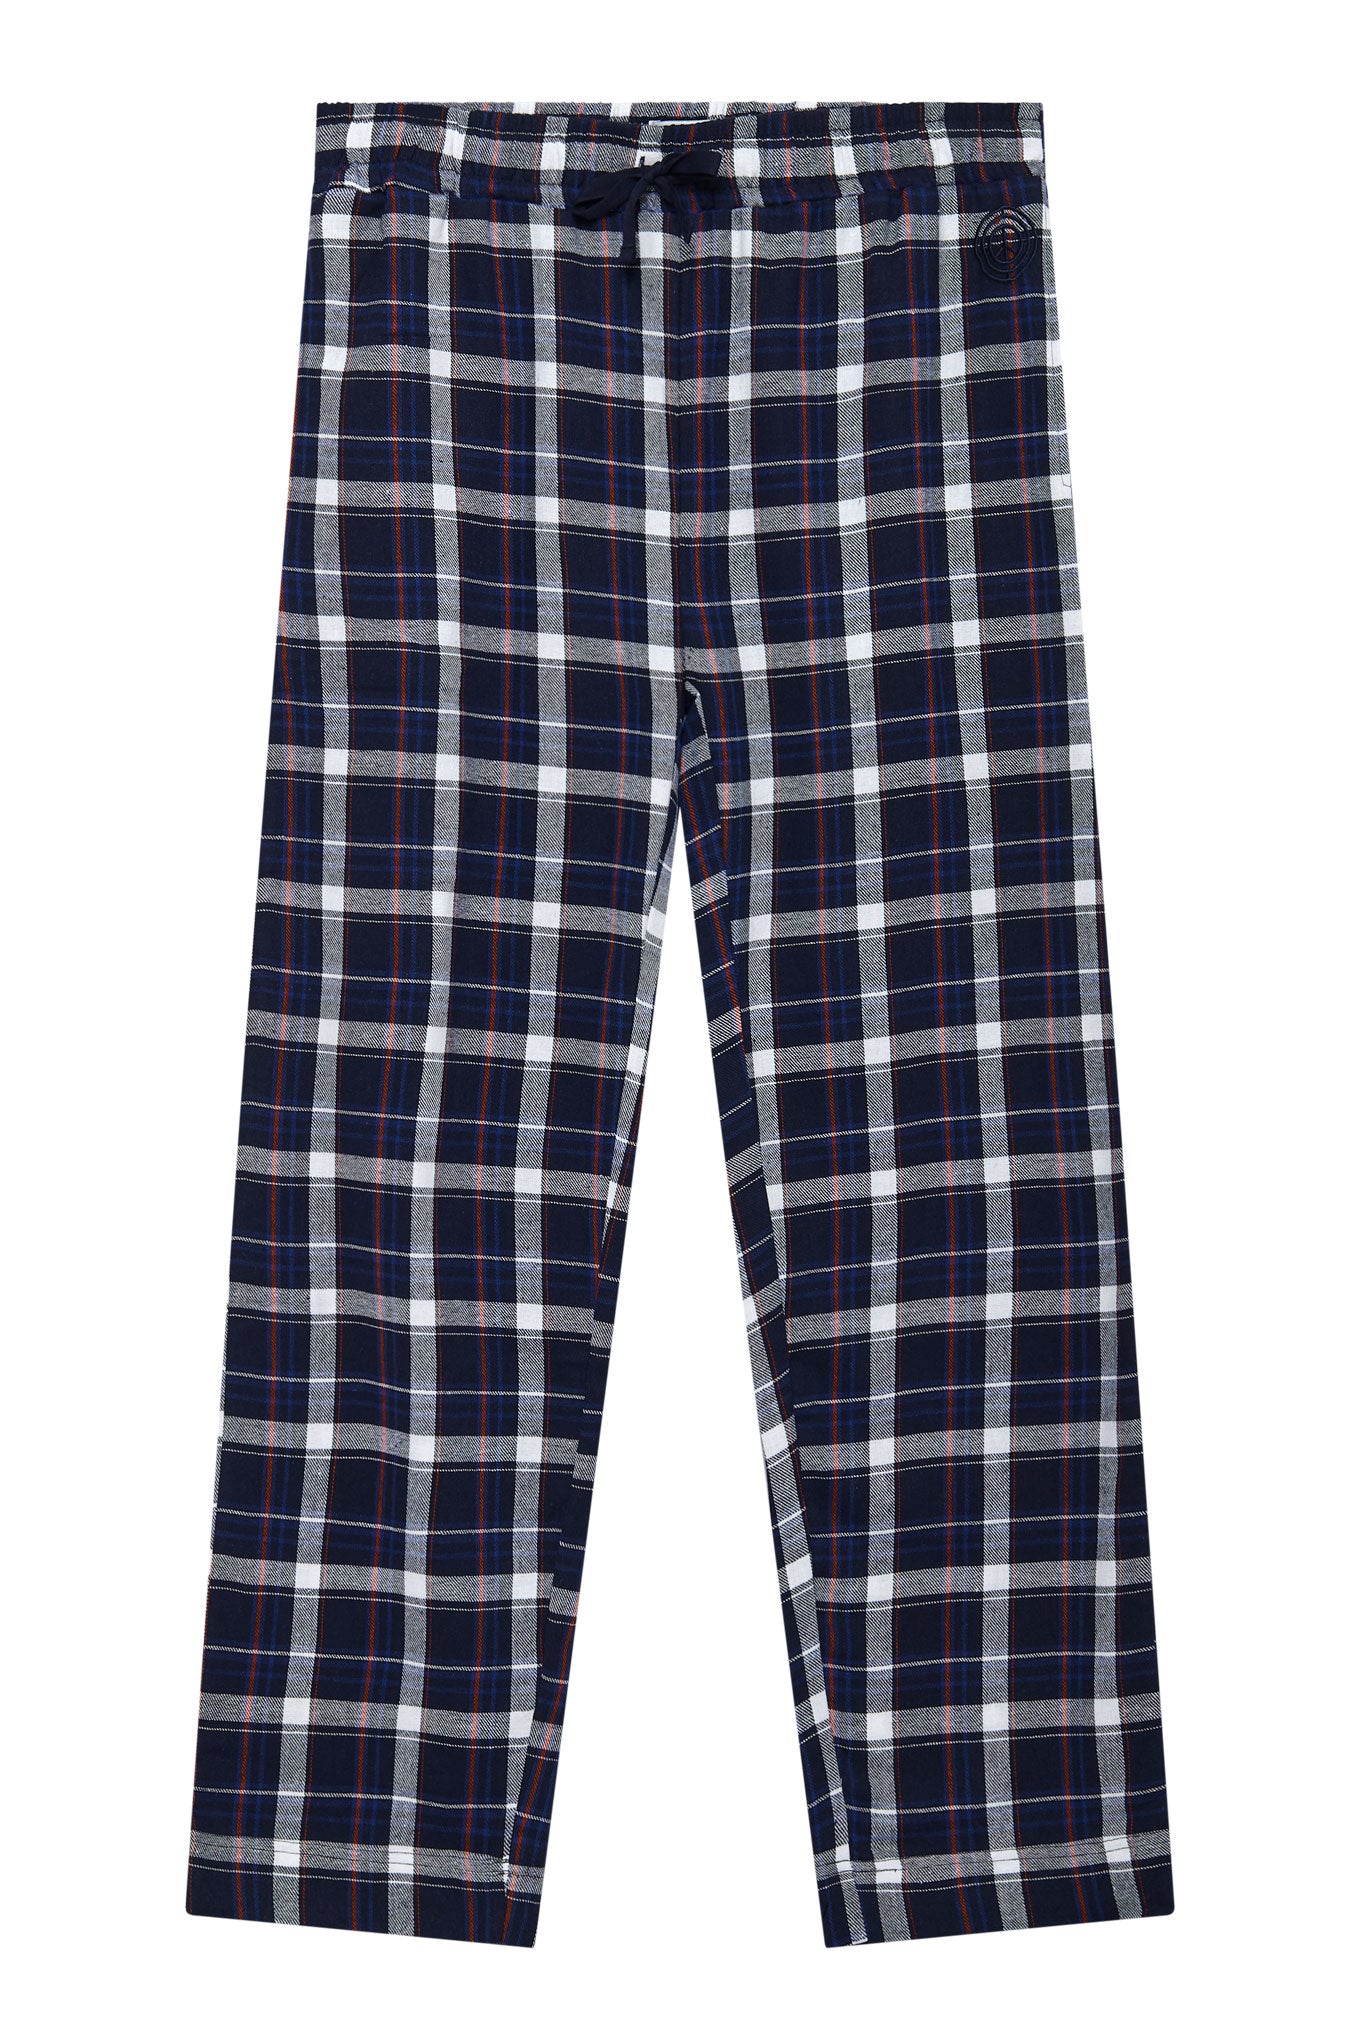 JIM JAM - Mens Organic Cotton Pyjama Bottoms Dark Navy